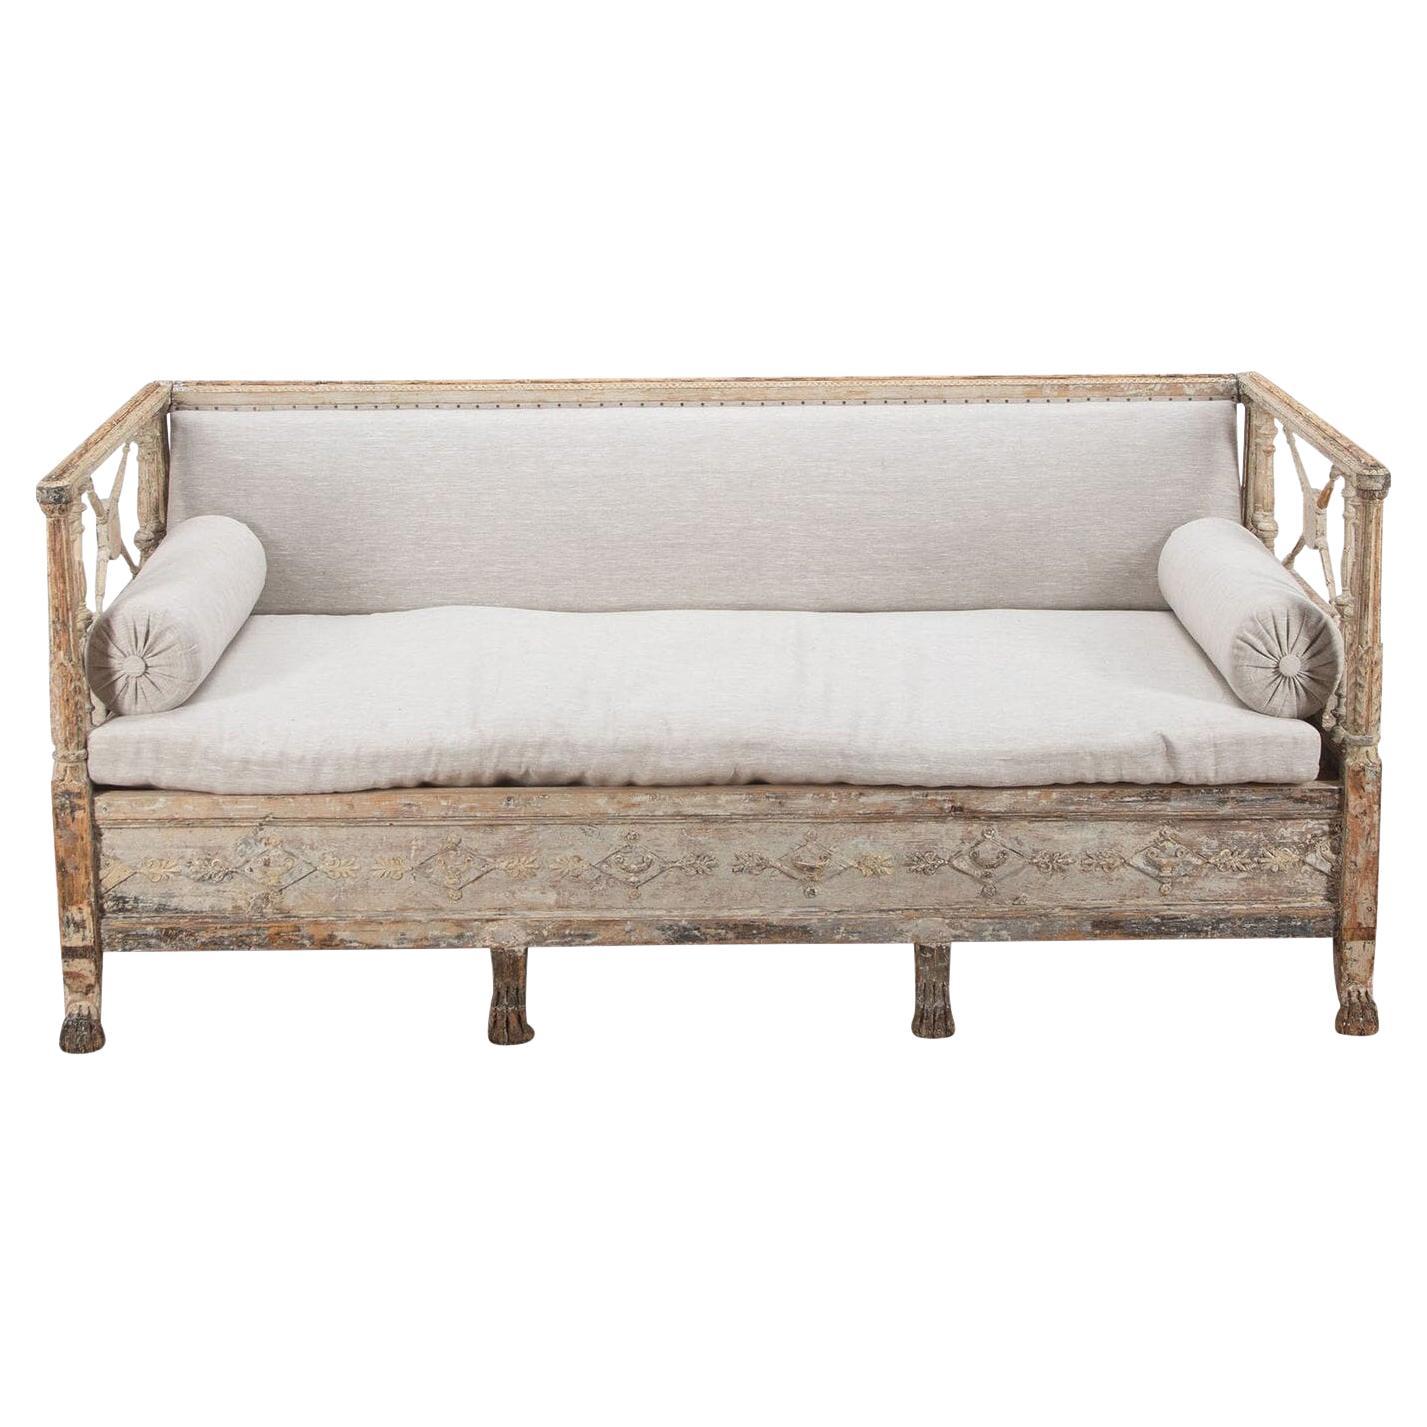 19th Century Swedish Classical Sofa